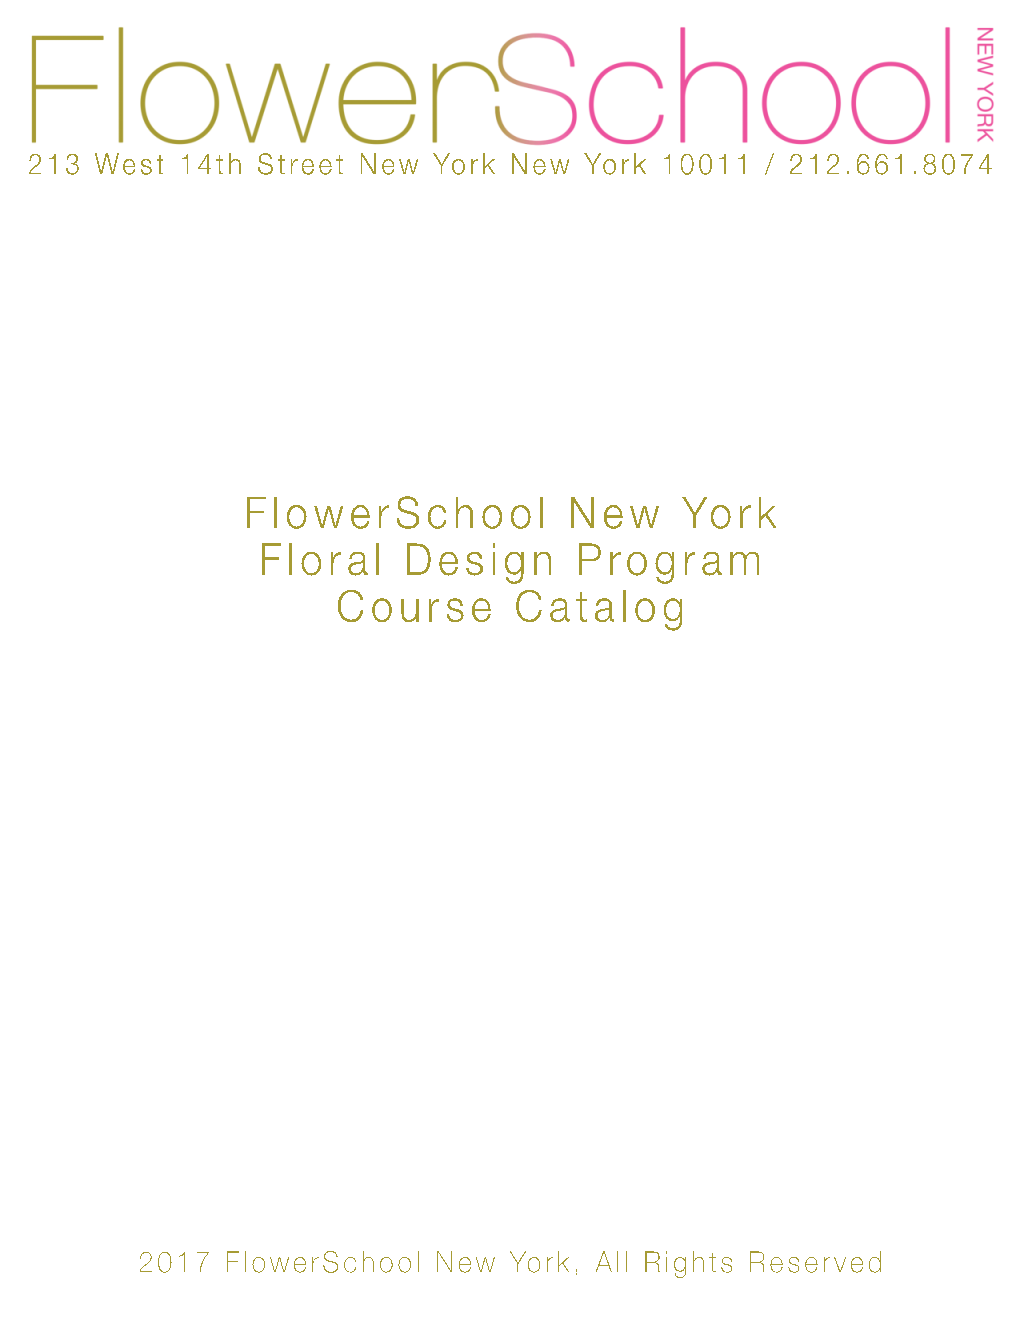 Flowerschool New York Floral Design Program Course Catalog